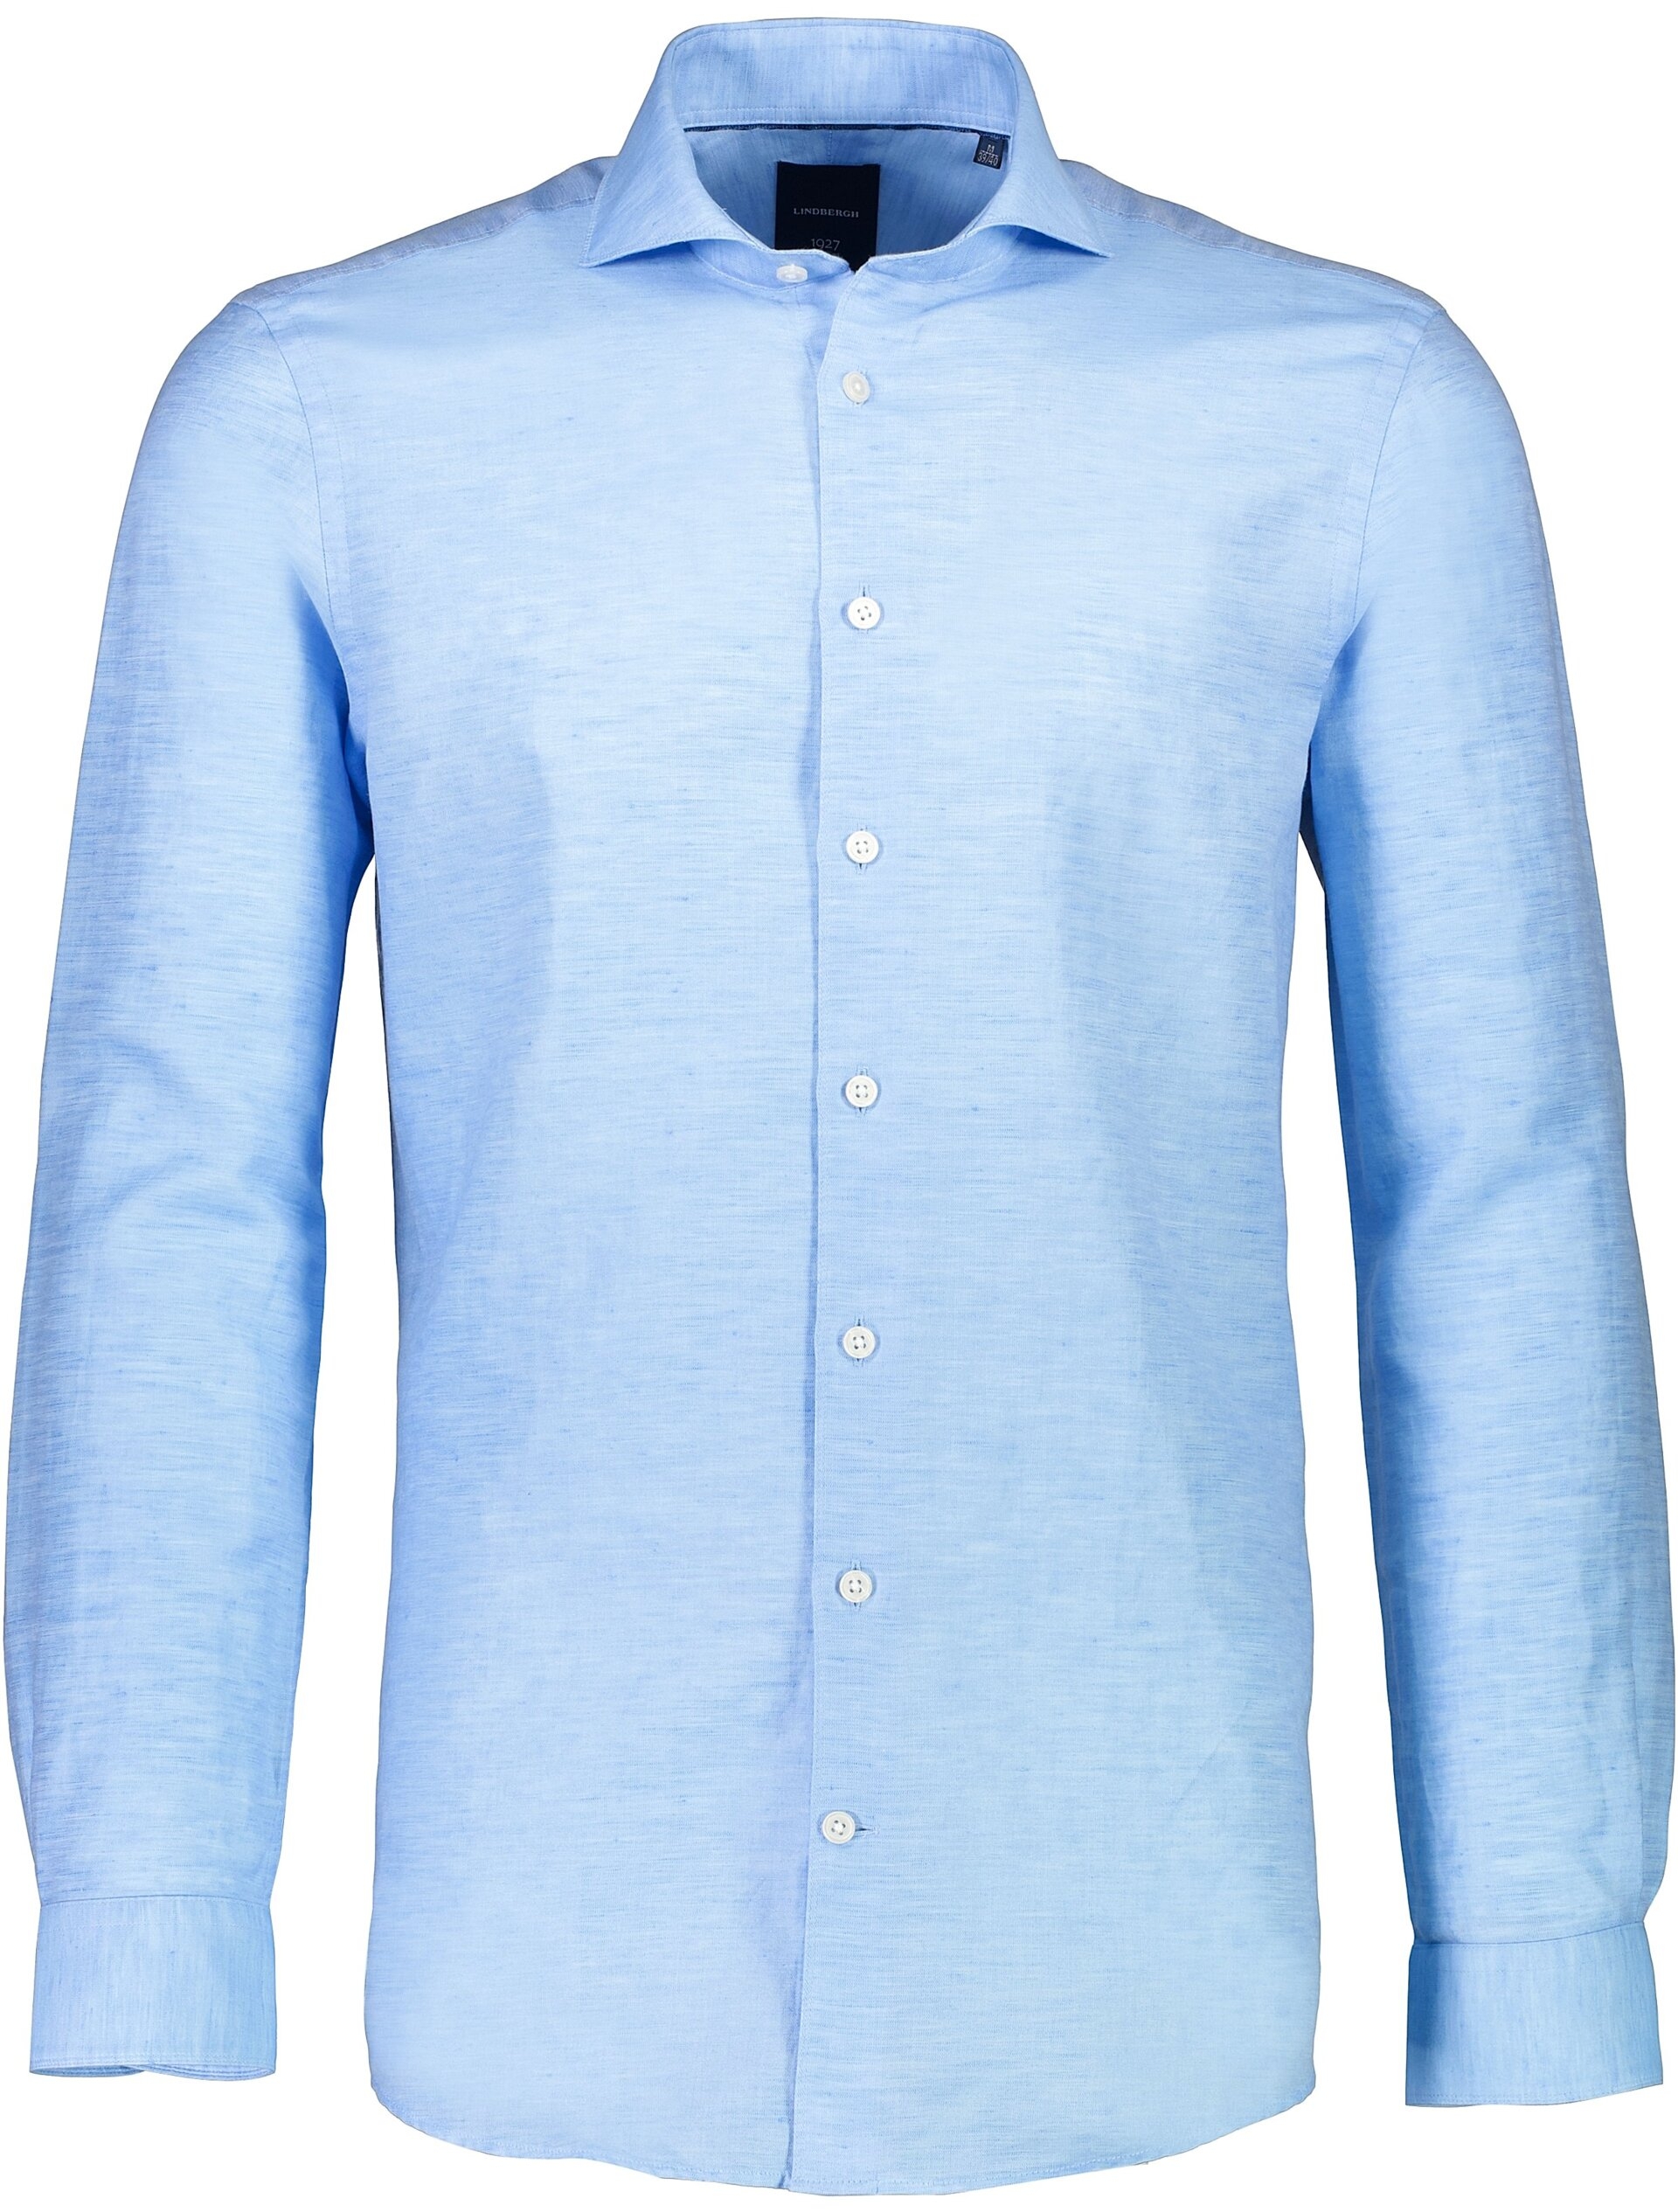 Lindbergh Casual shirt blue / light blue